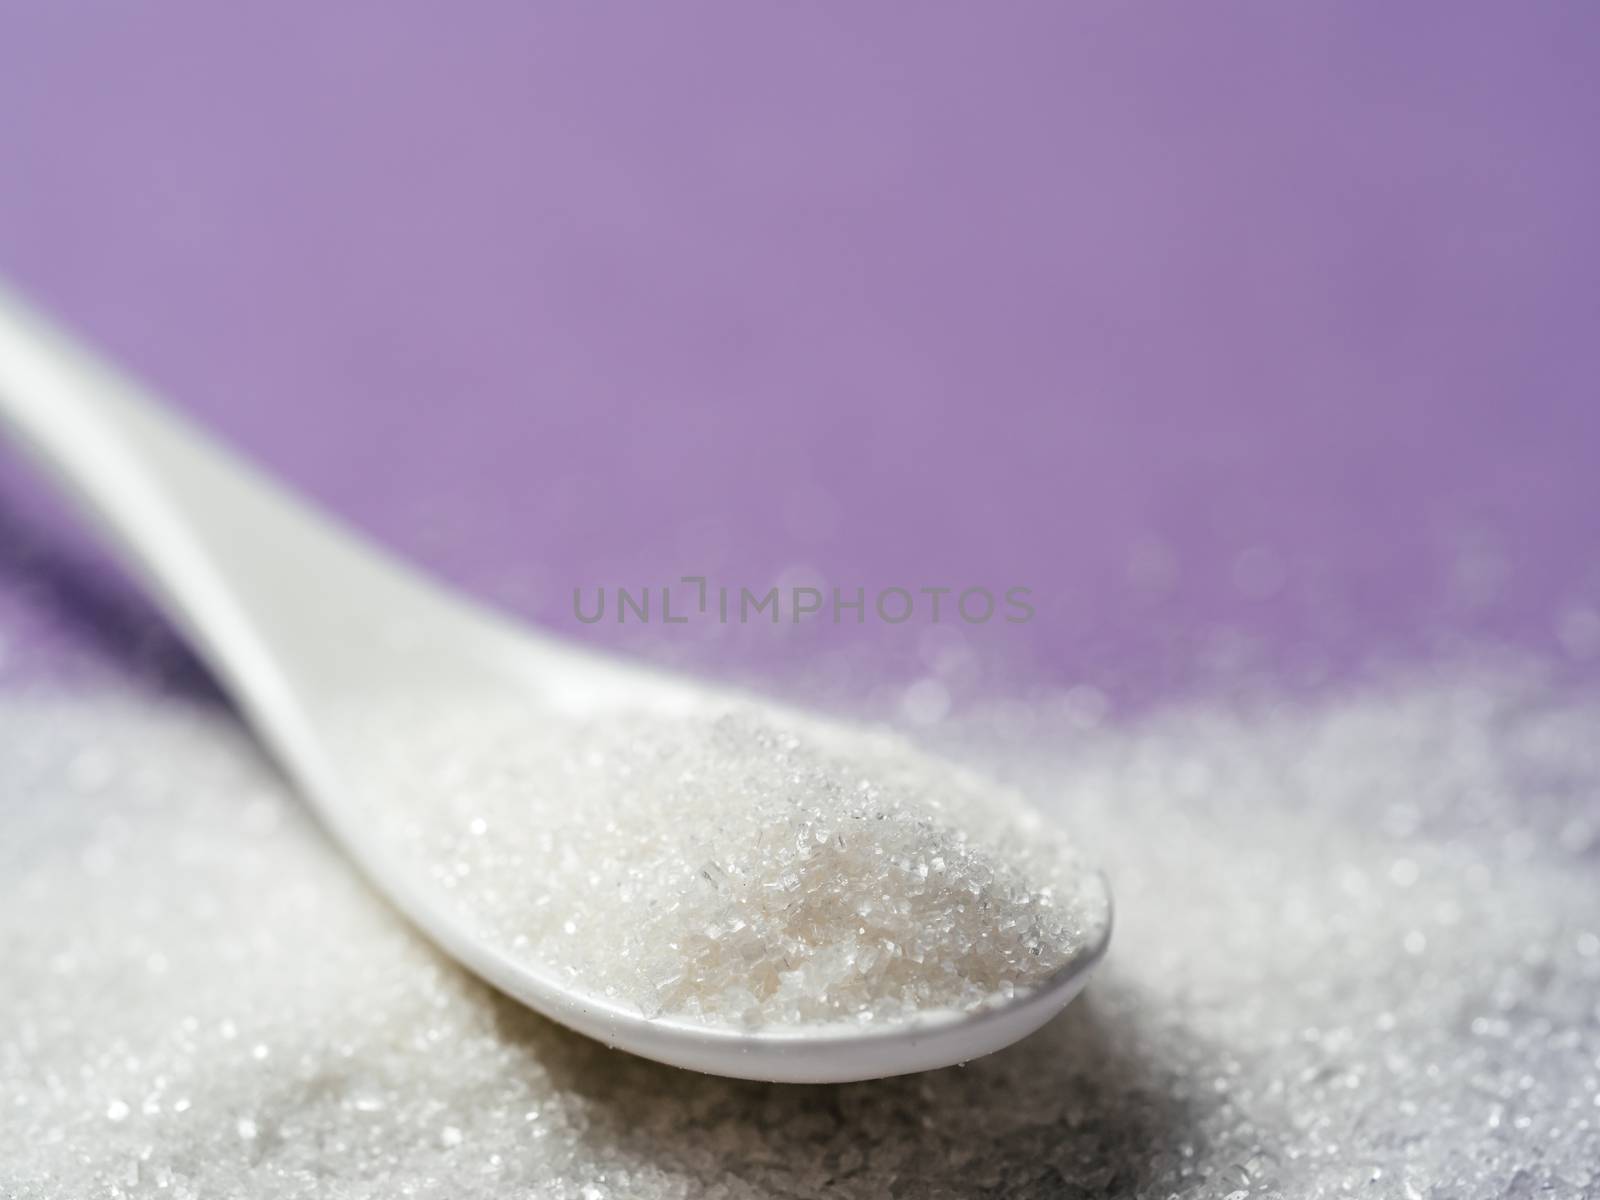 Sugar in white spoon on violet, copy space by fascinadora